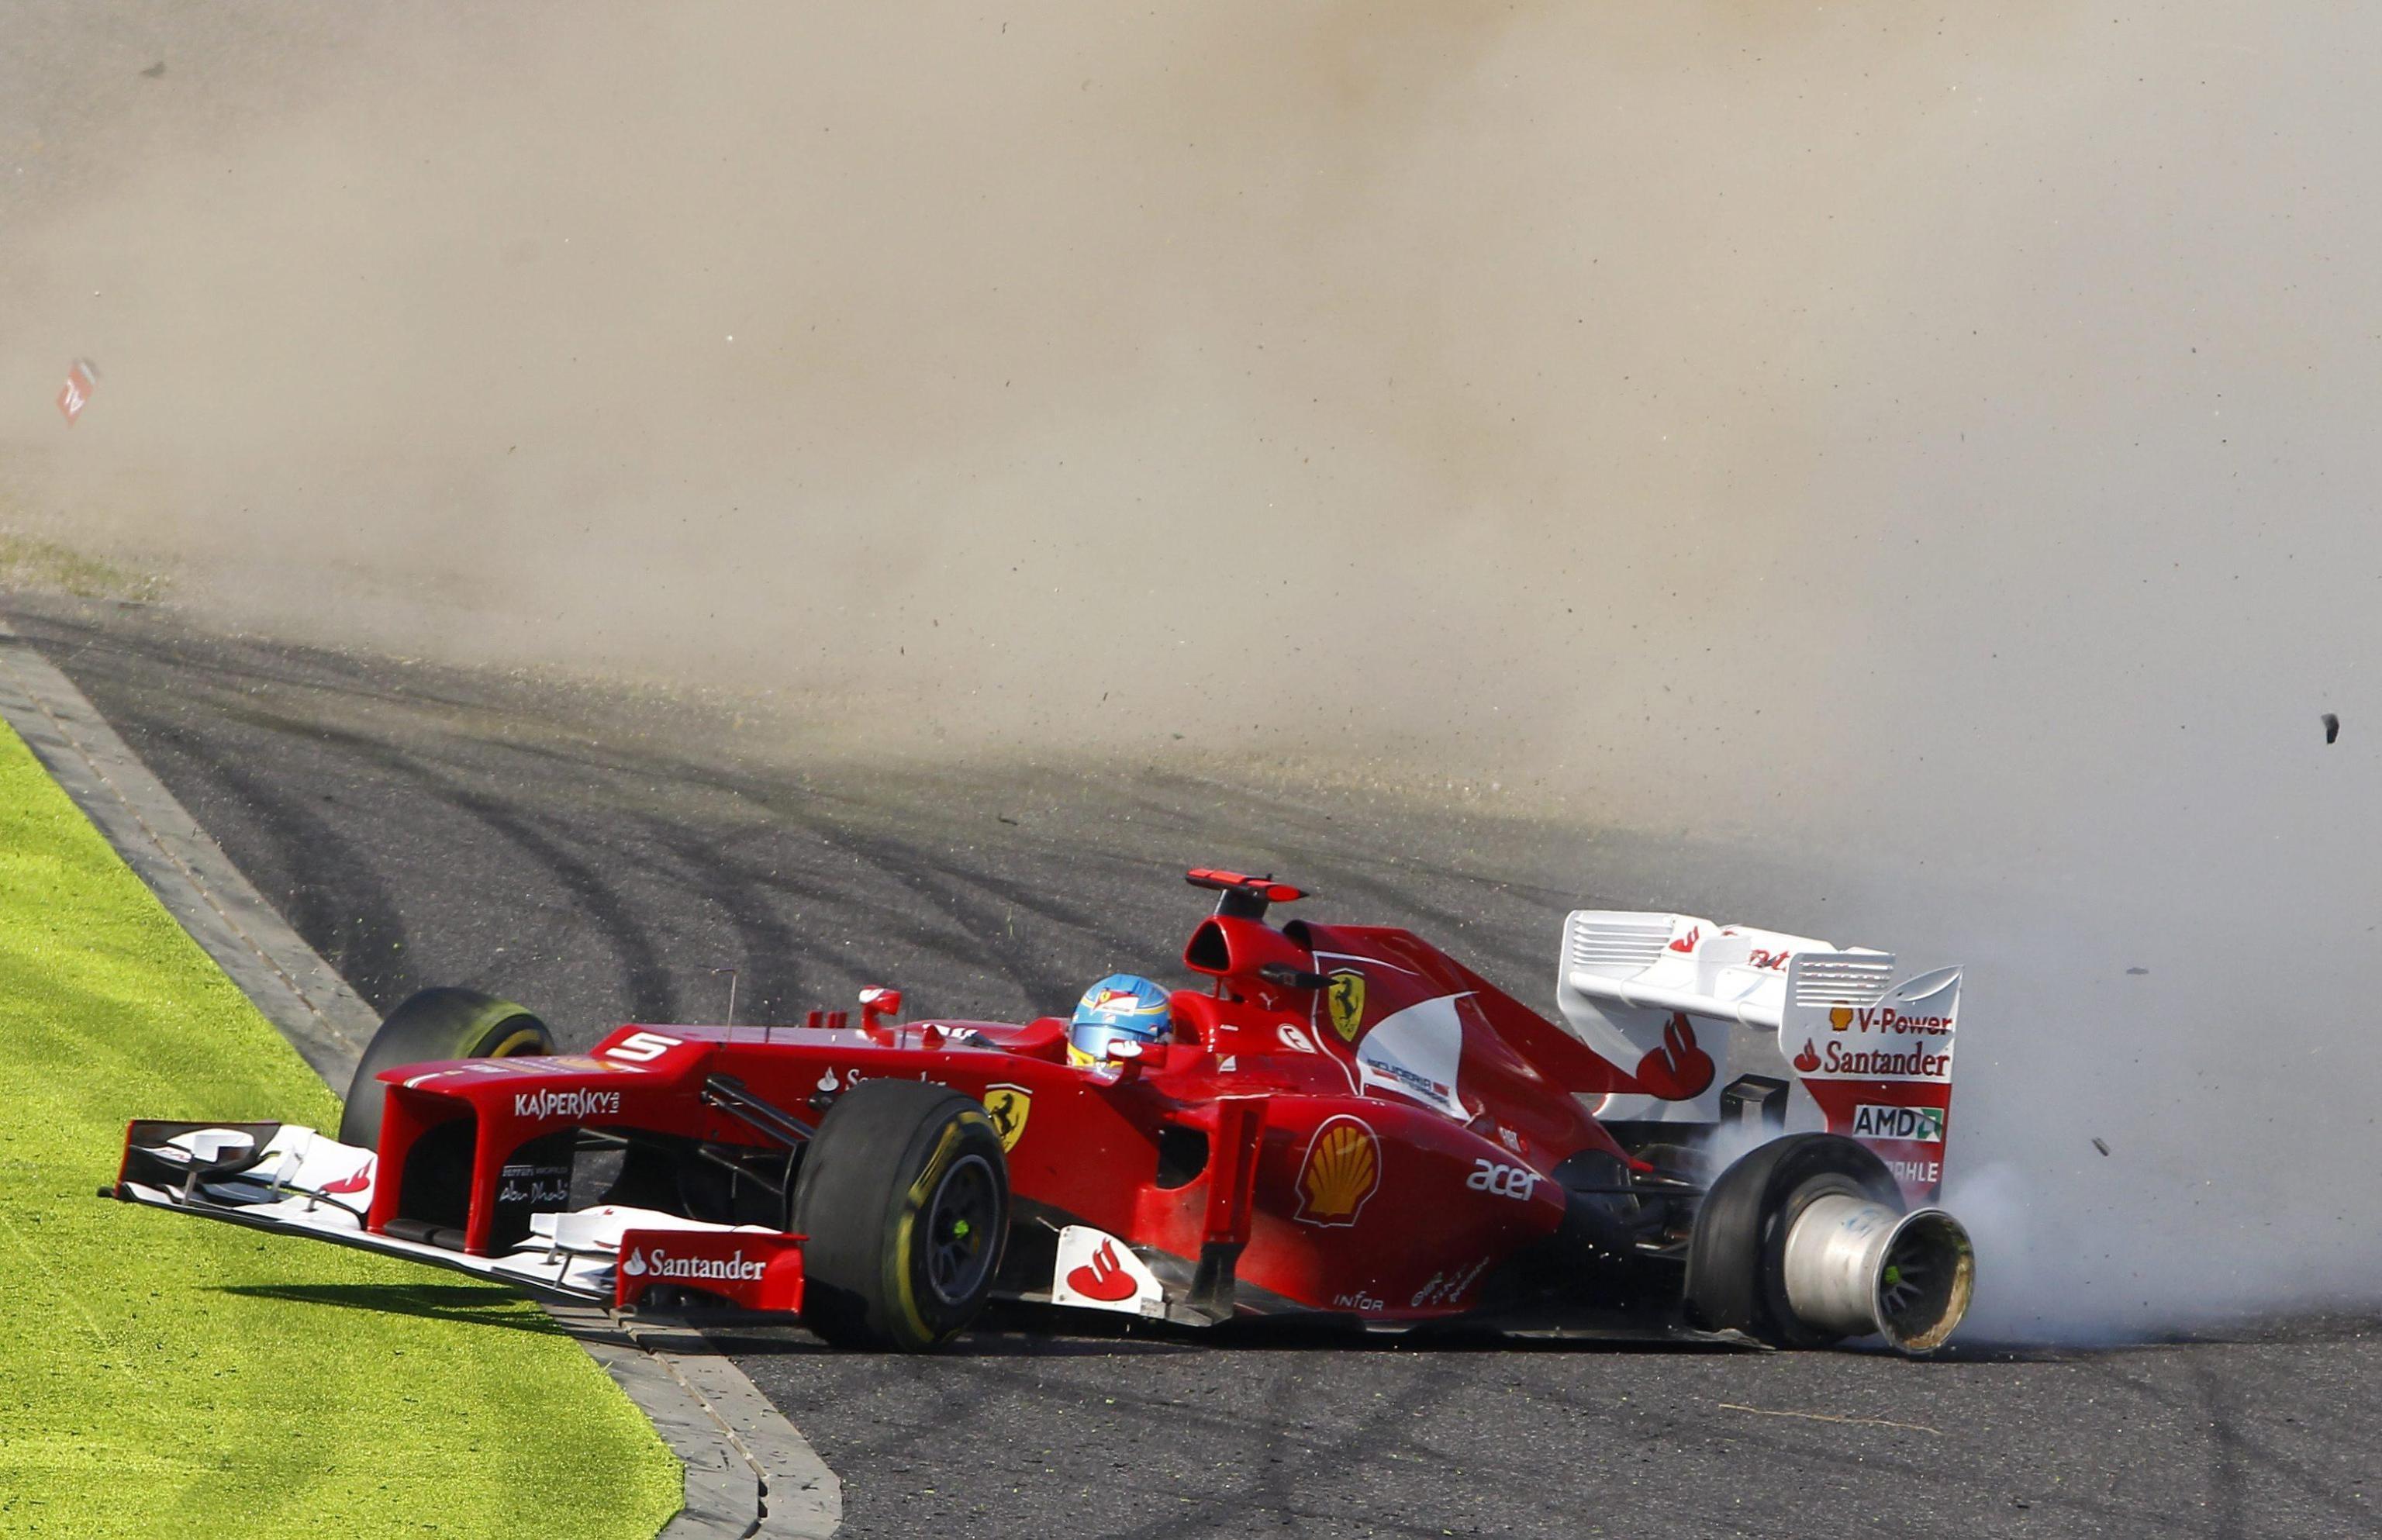 cars, Ferrari, crash, Formula One, Fernando Alonso, alonso, Grand